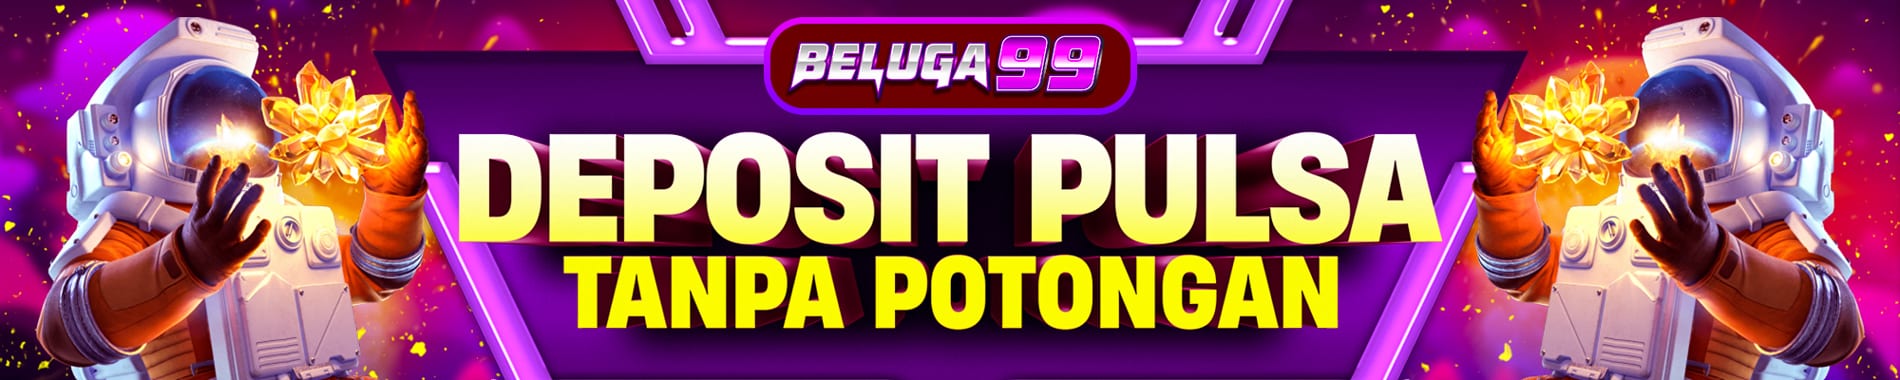 Slot Deposit Pulsa Tanpa Beluga99